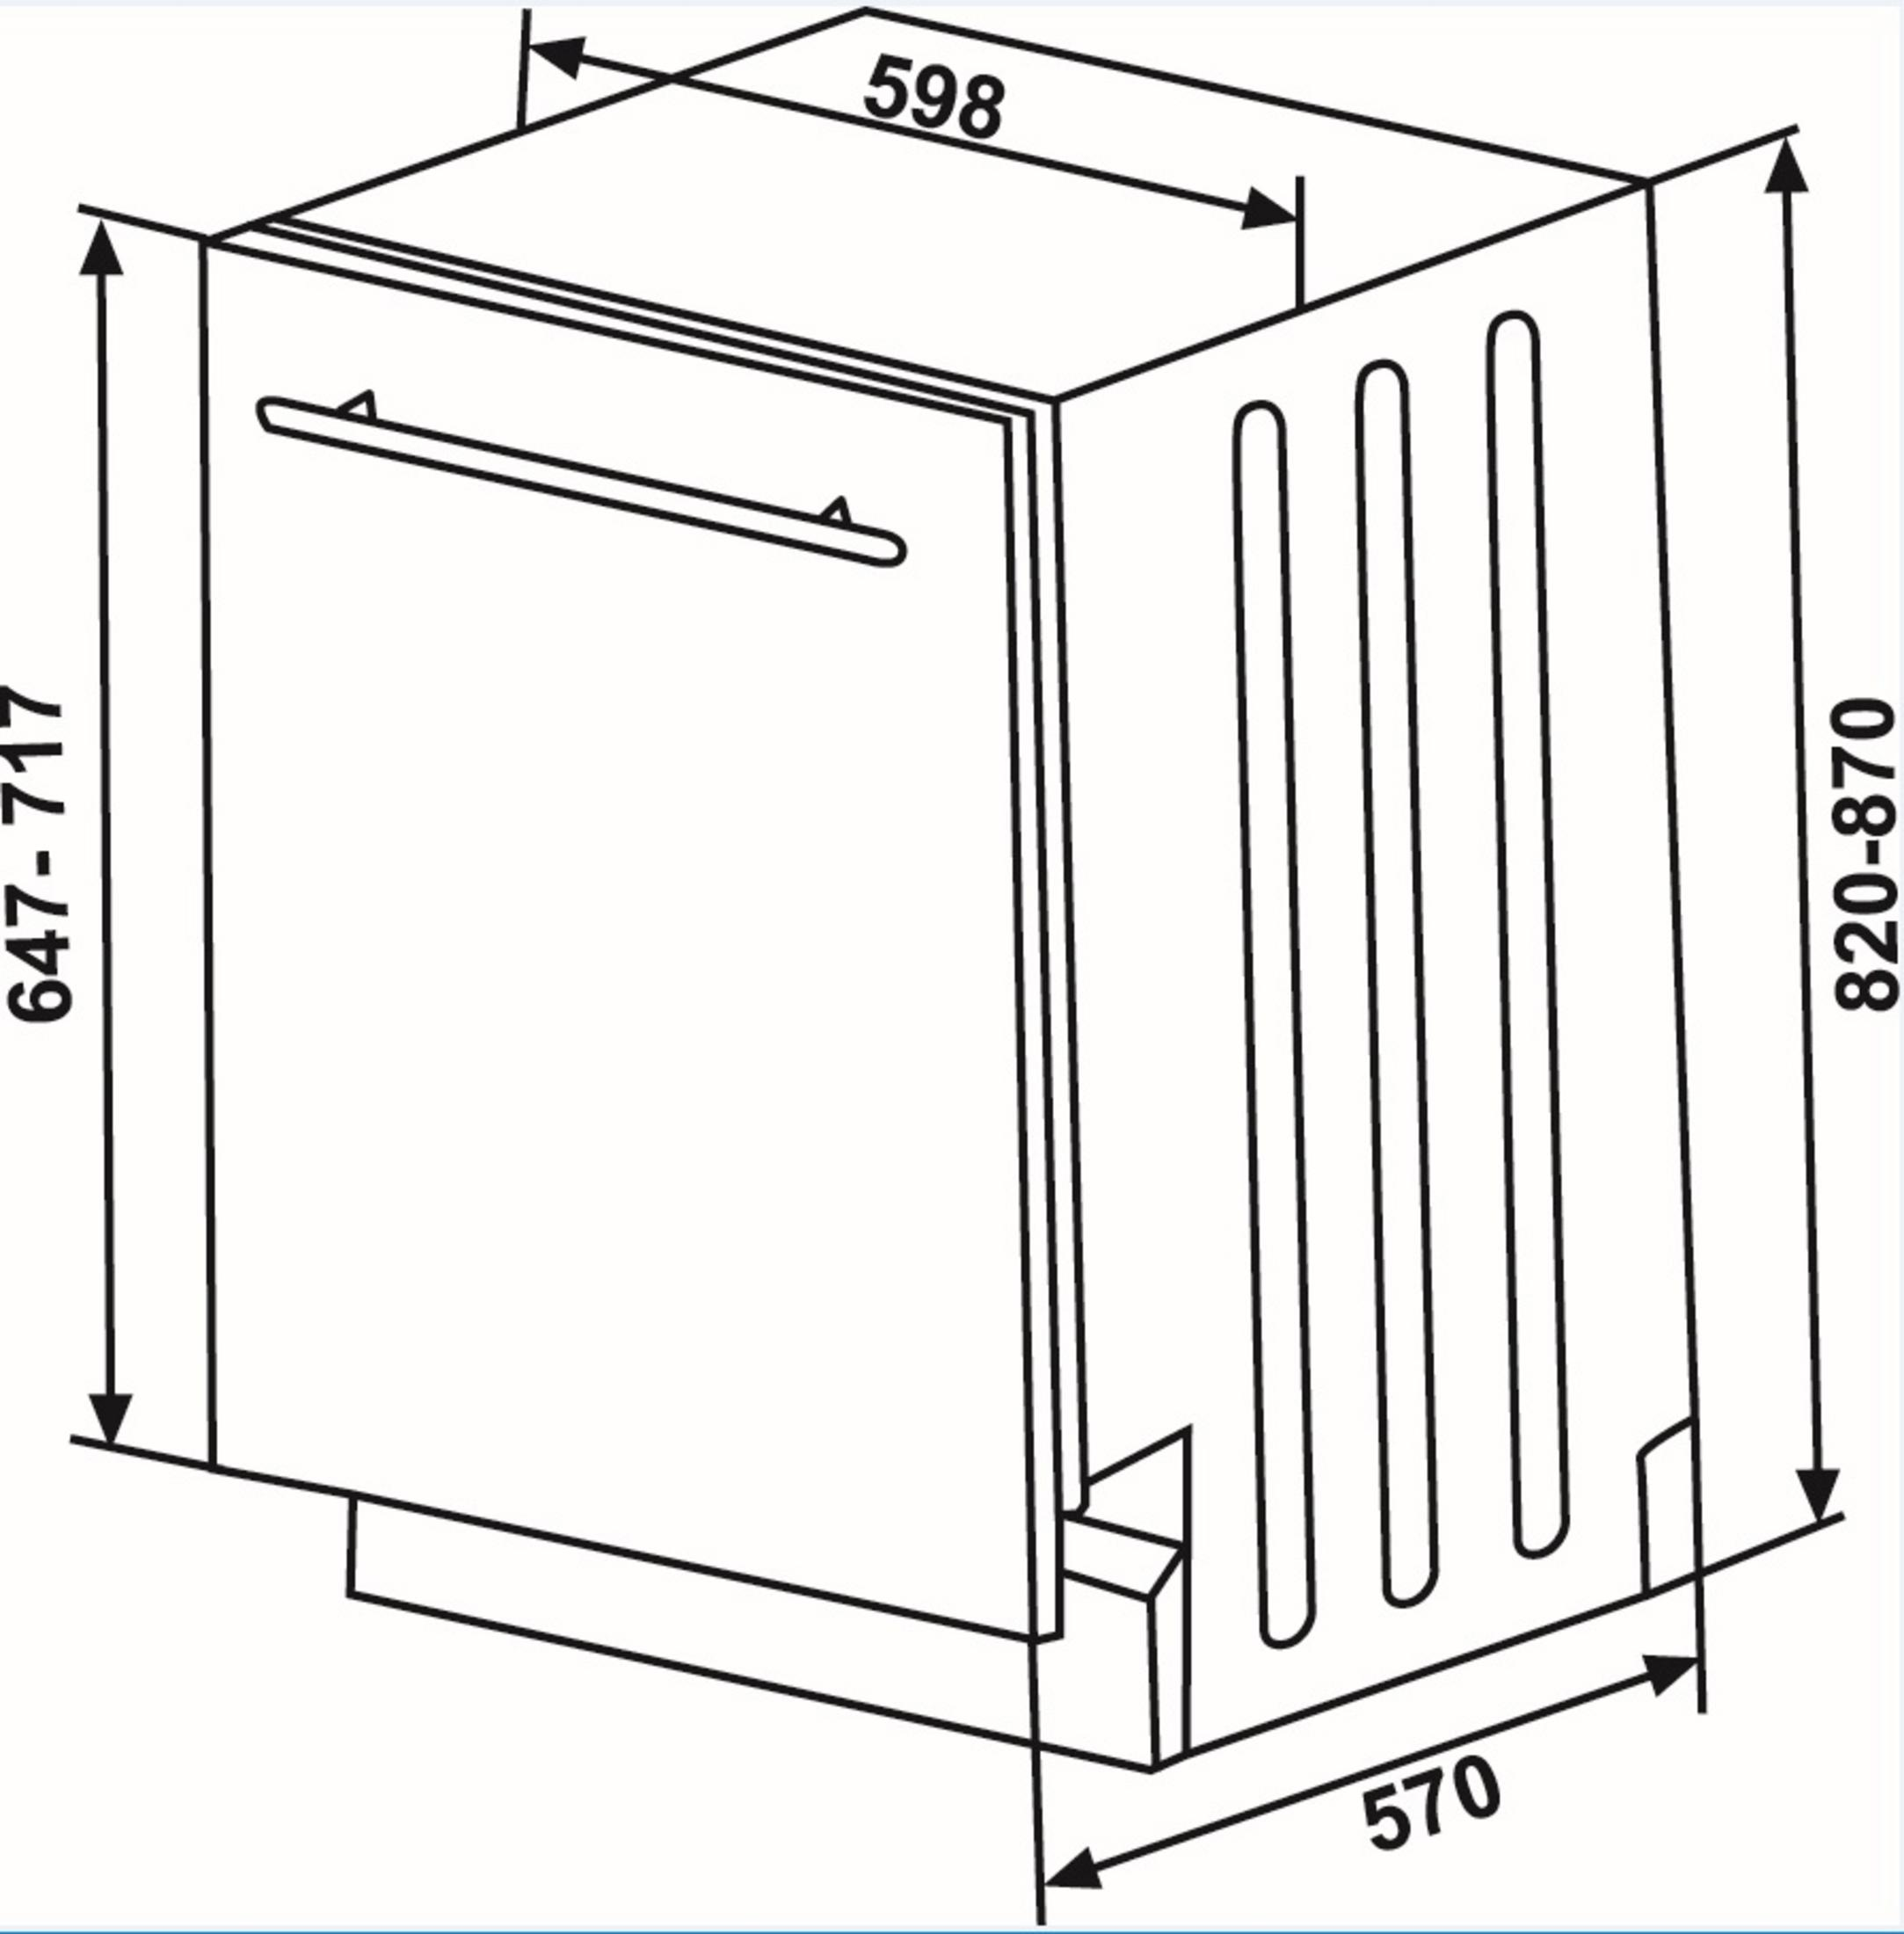 (vollintegrierbar 600 (A), QW-NI14I47EX-DE dB (Besteckkorb, SHARP 47 mm breit, E) Geschirrspüler